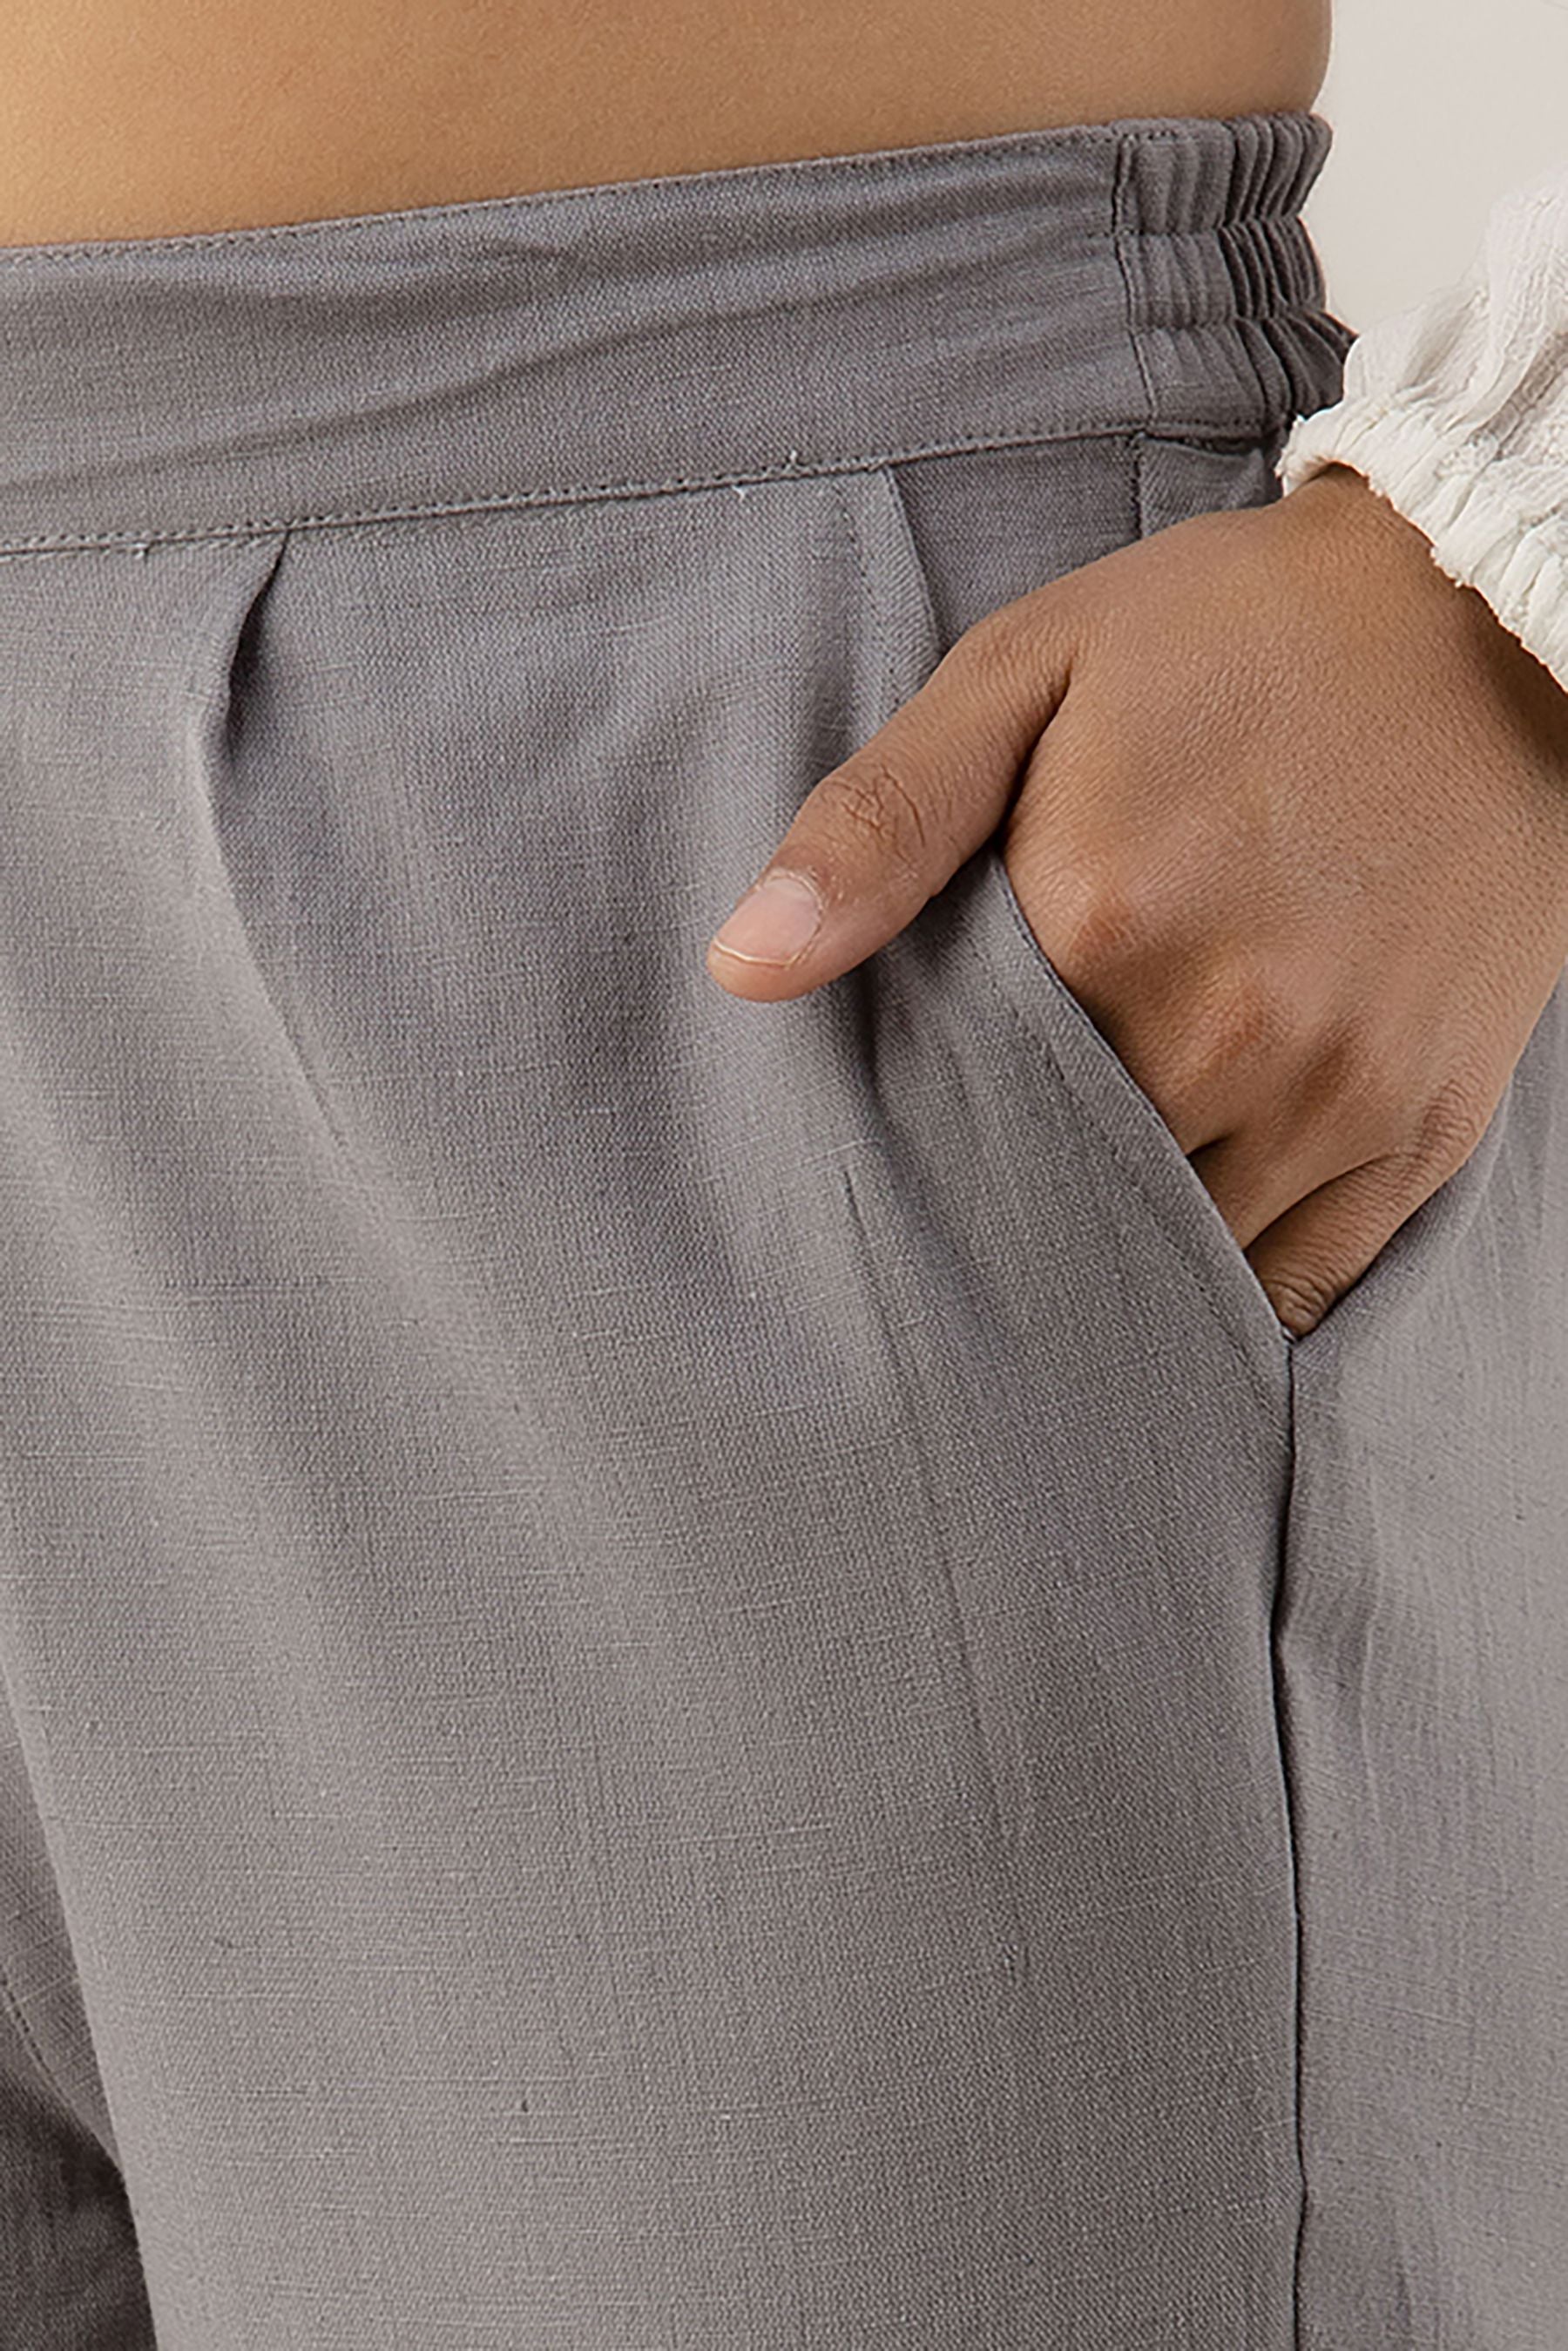 Ladies Grey Cotton Cigarette Pants at Rs 225/piece, Ladies Pant in Ranchi